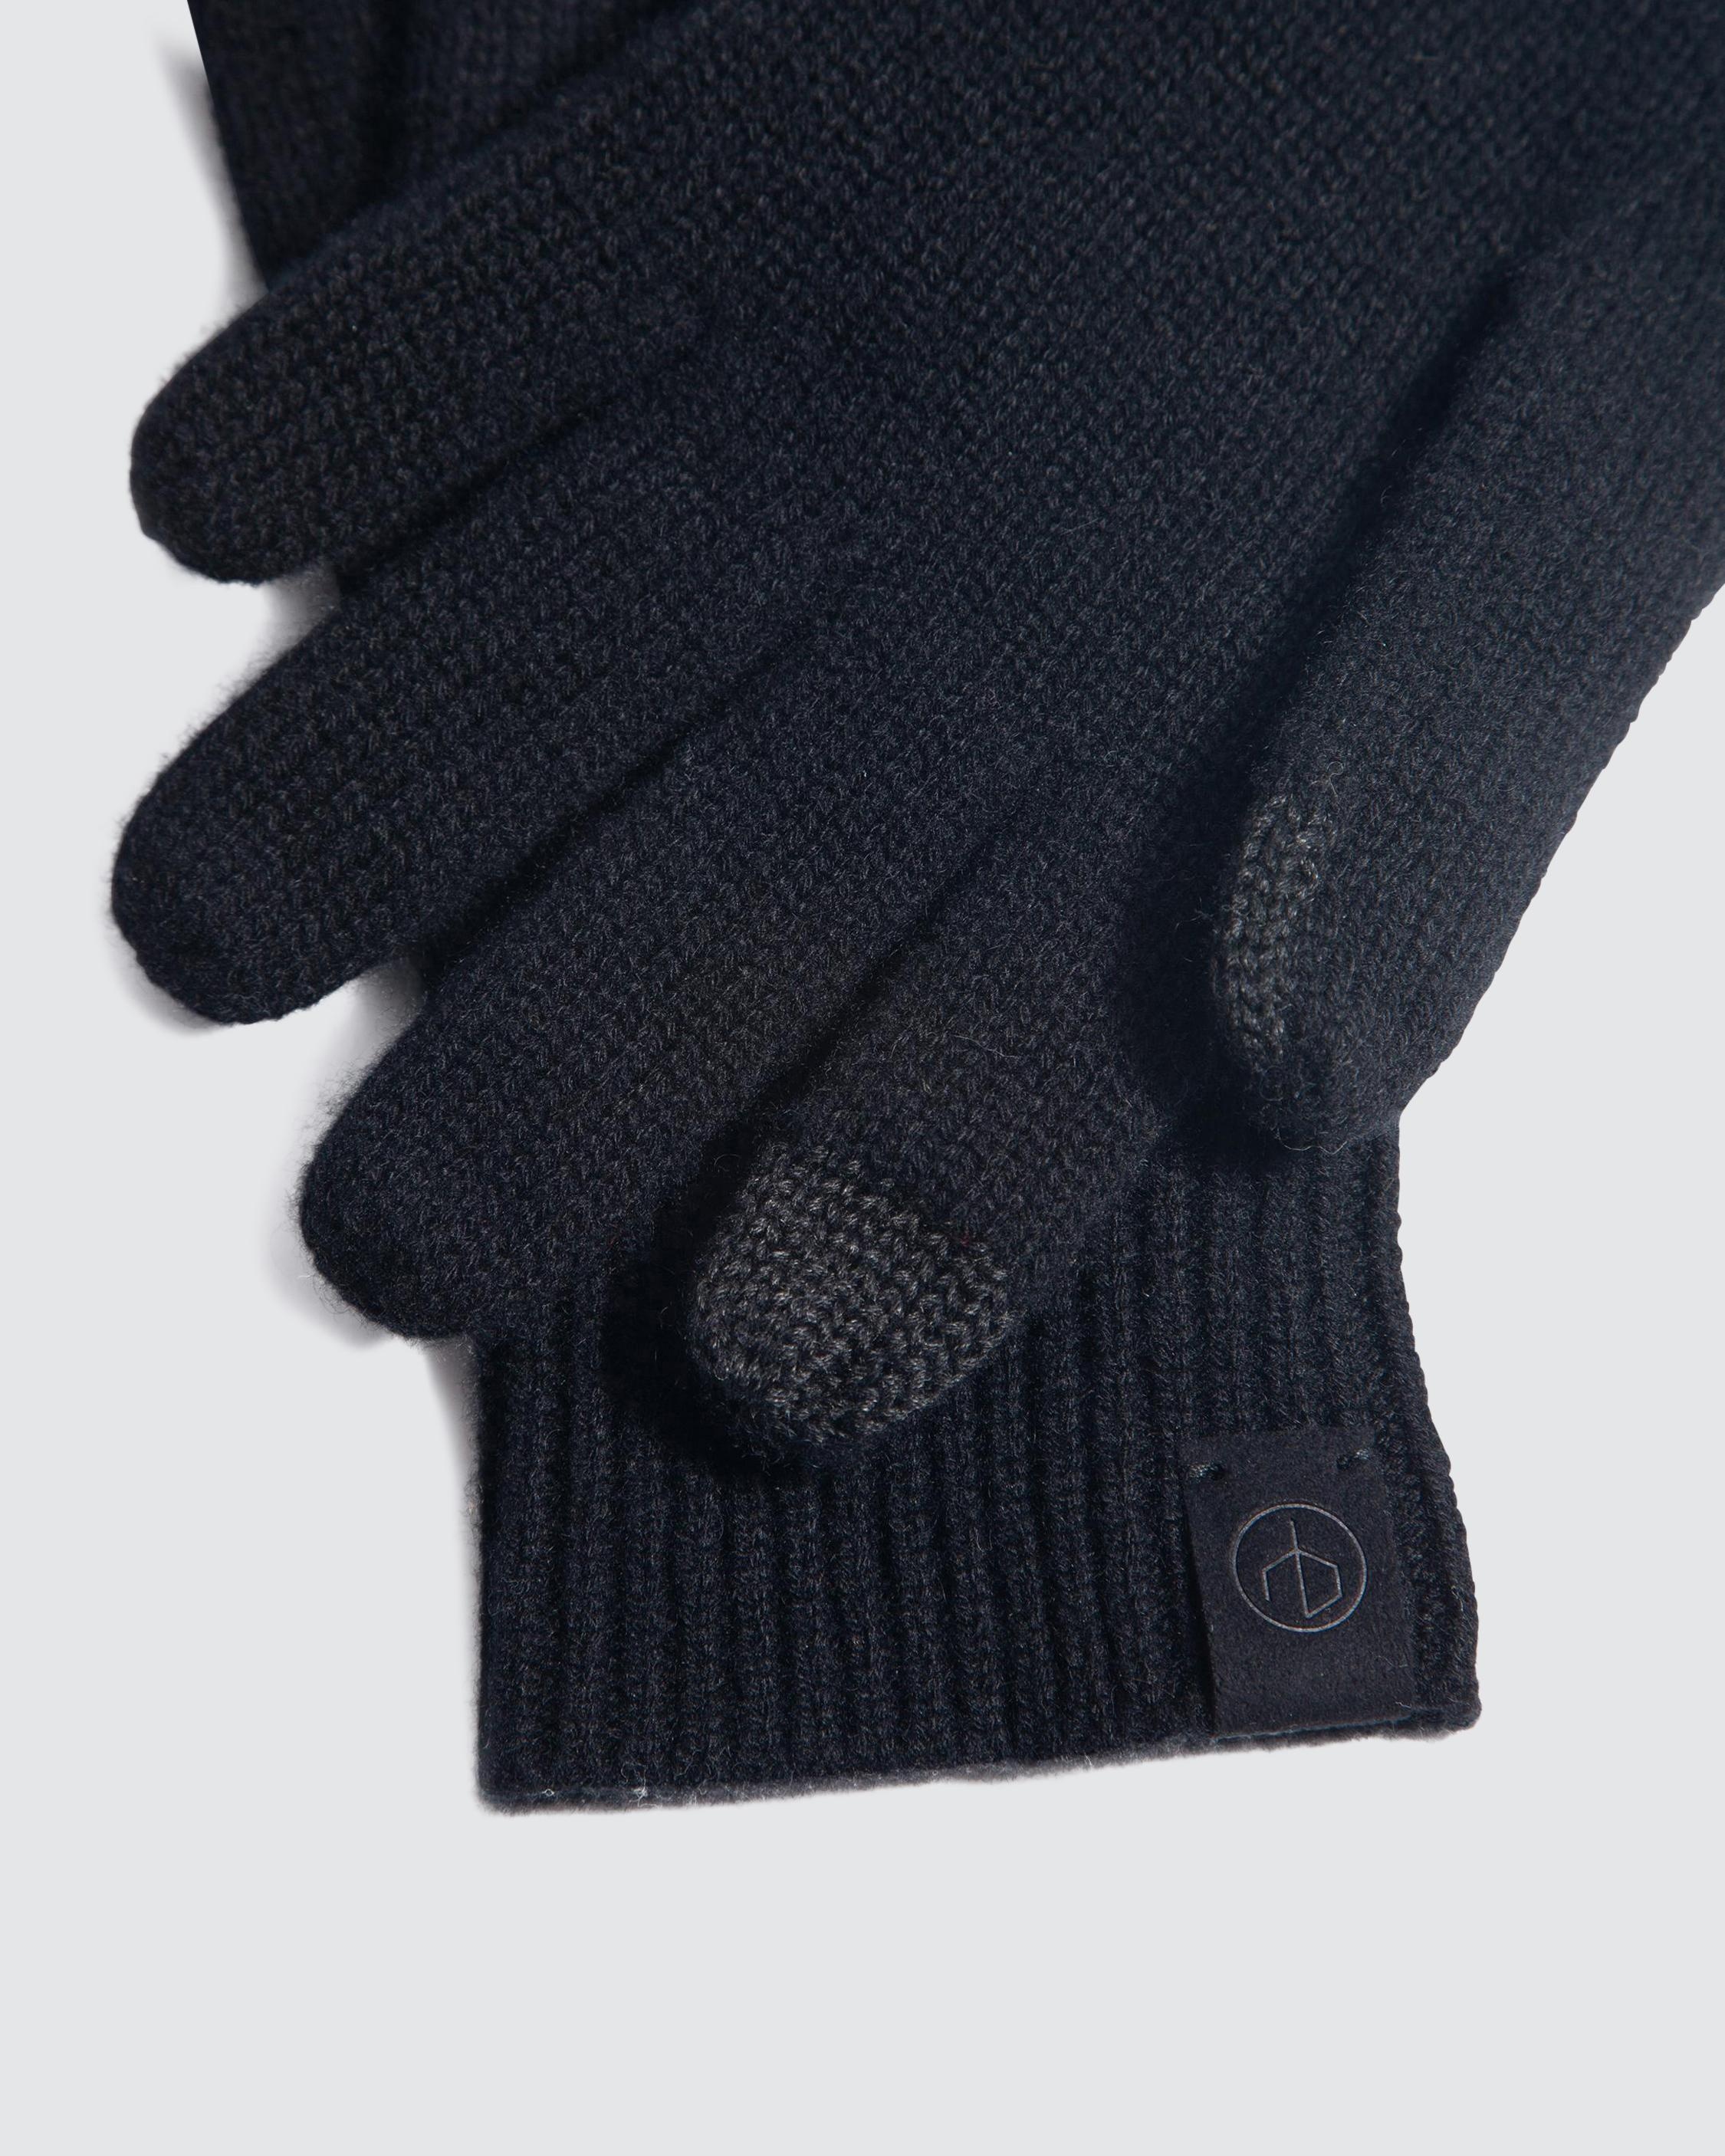 Addison Tech Gloves
Wool Gloves - 3